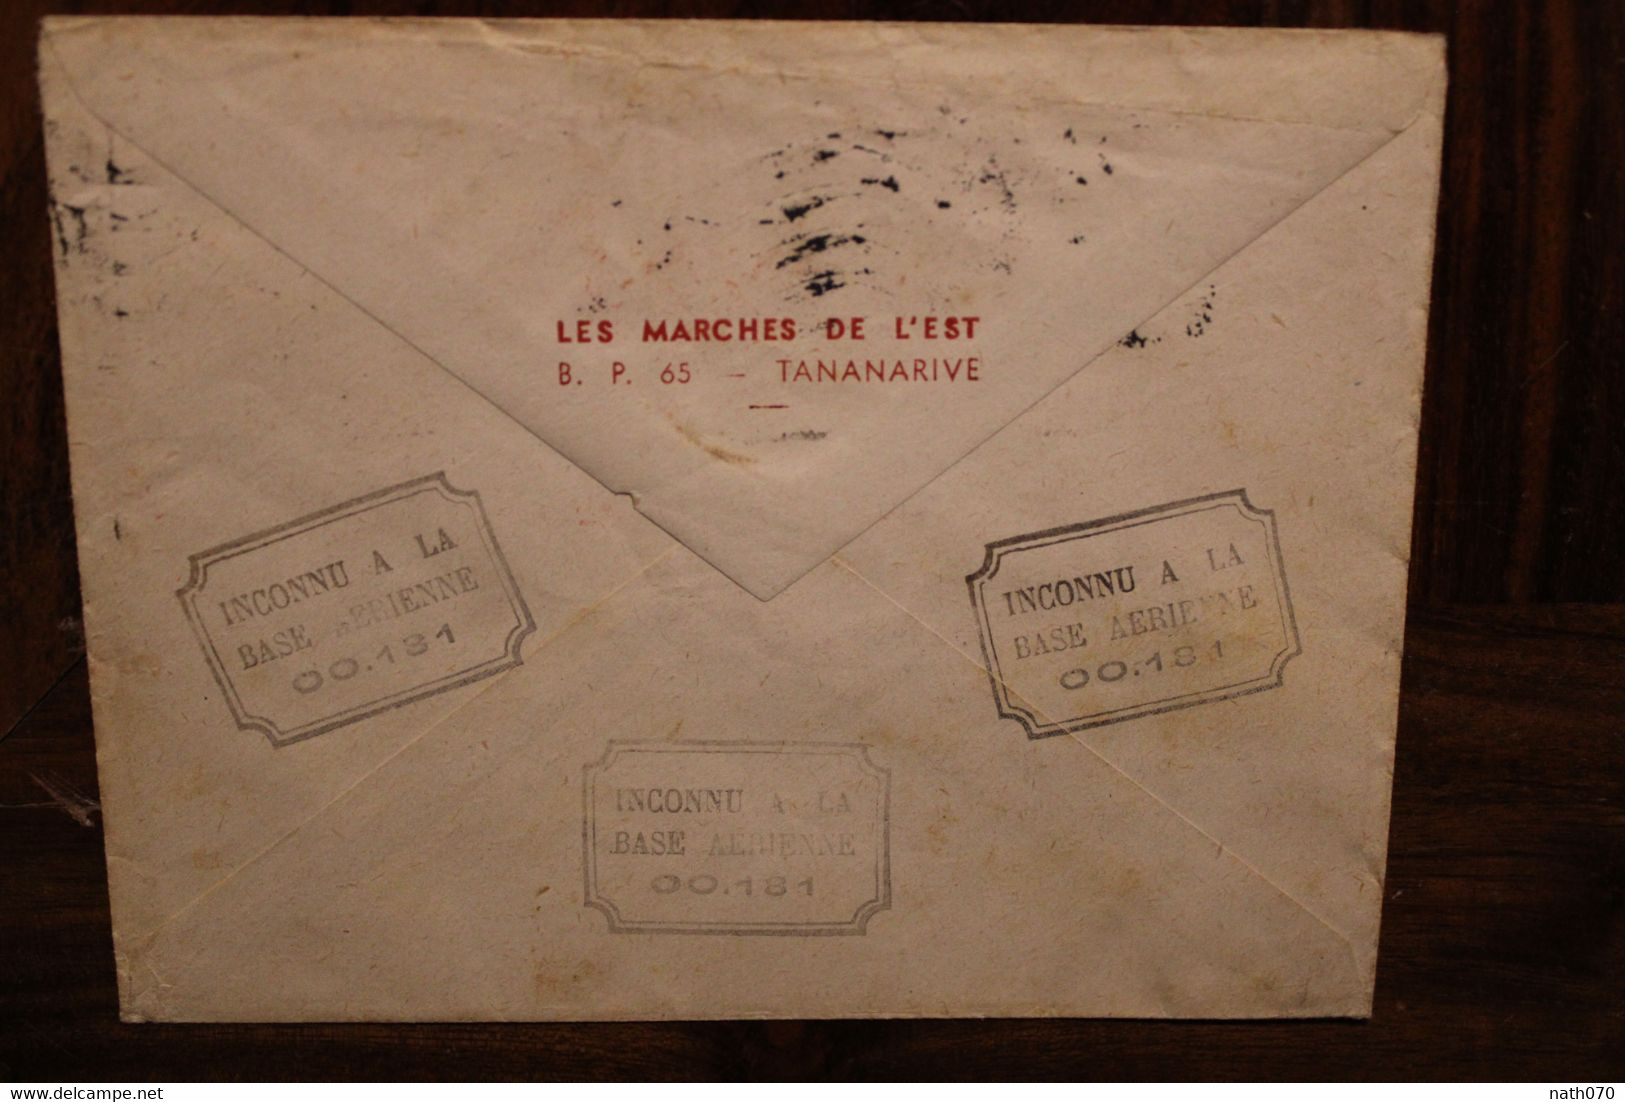 1957 Madagascar France Inconnu à La Base Aerienne Timbre Seul Cover Air Mail Flamme Radio Naviguant Militaire Ivalo - Lettres & Documents